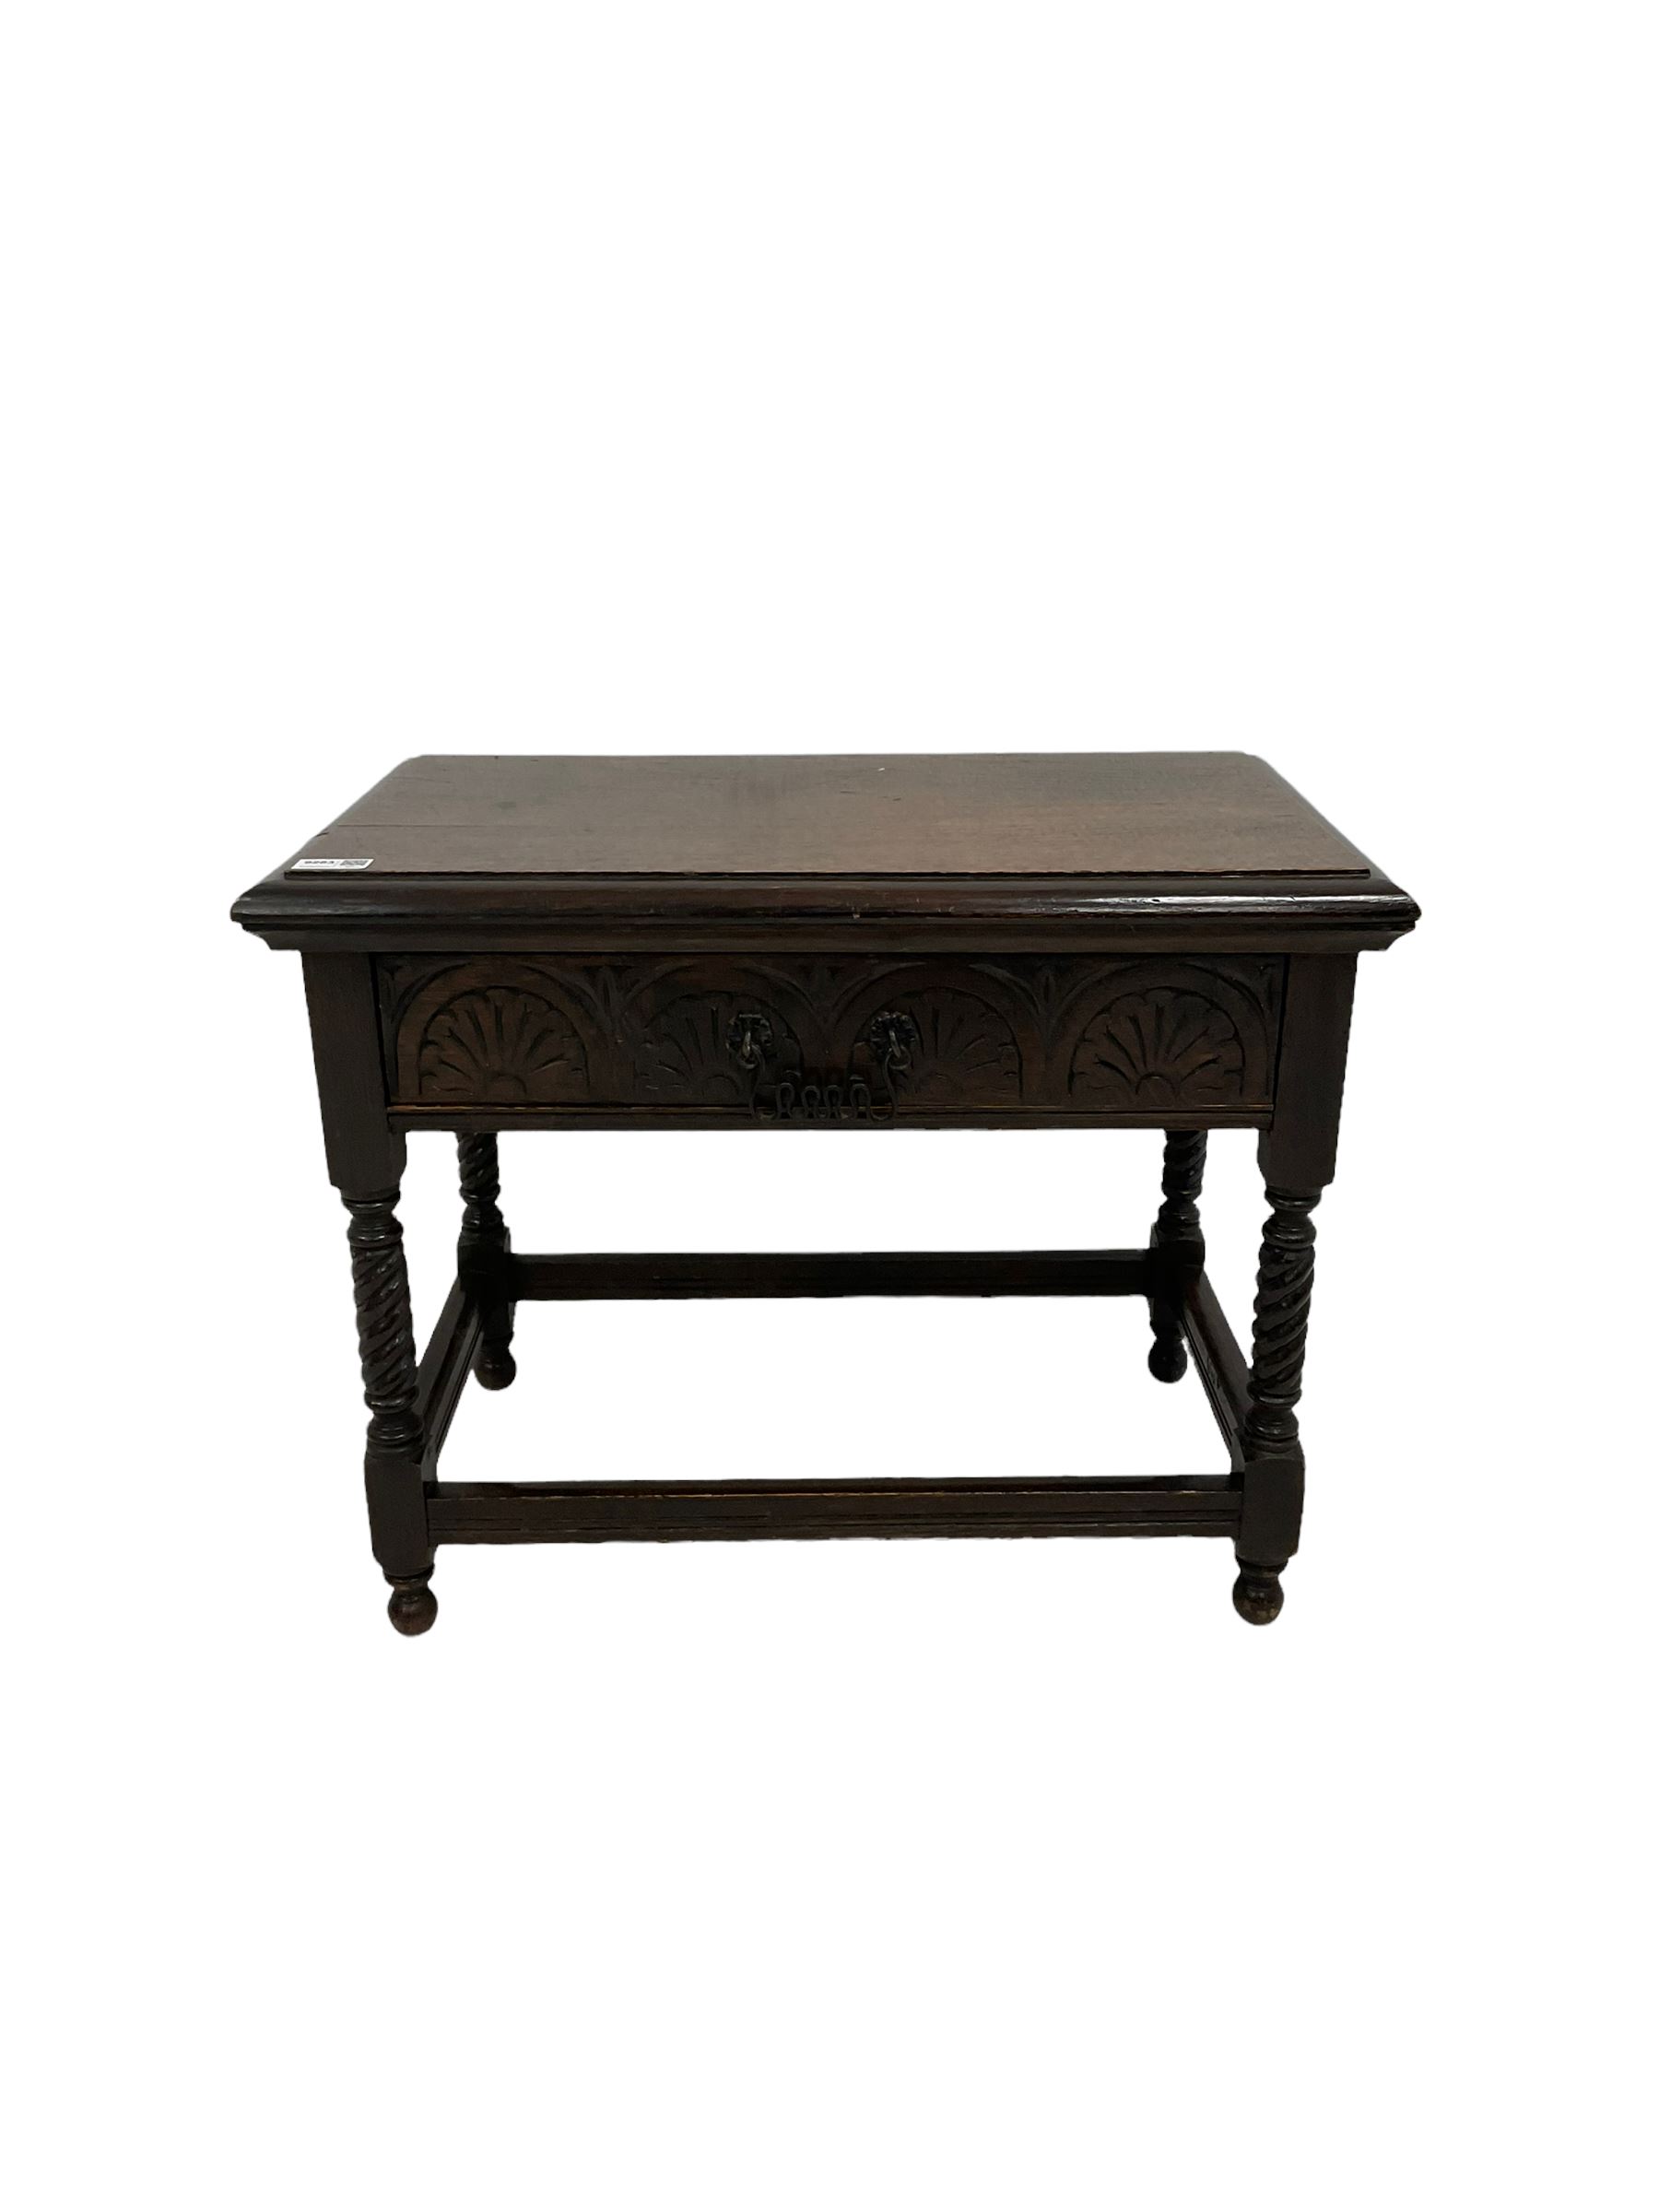 19th century oak table